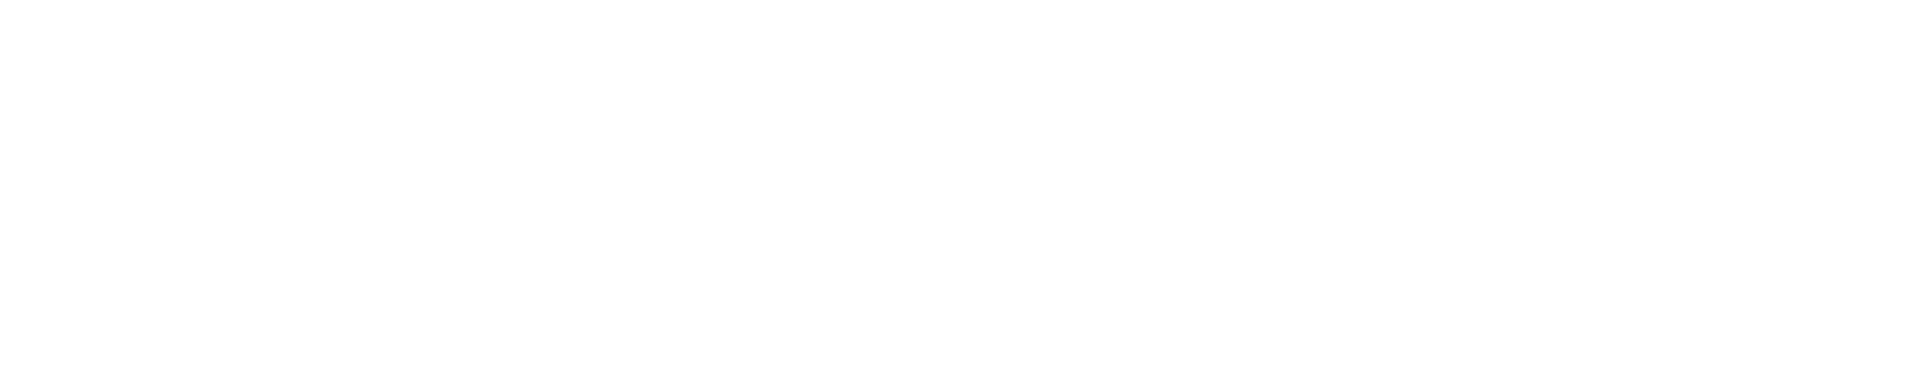 Logo Telemedellín Footer